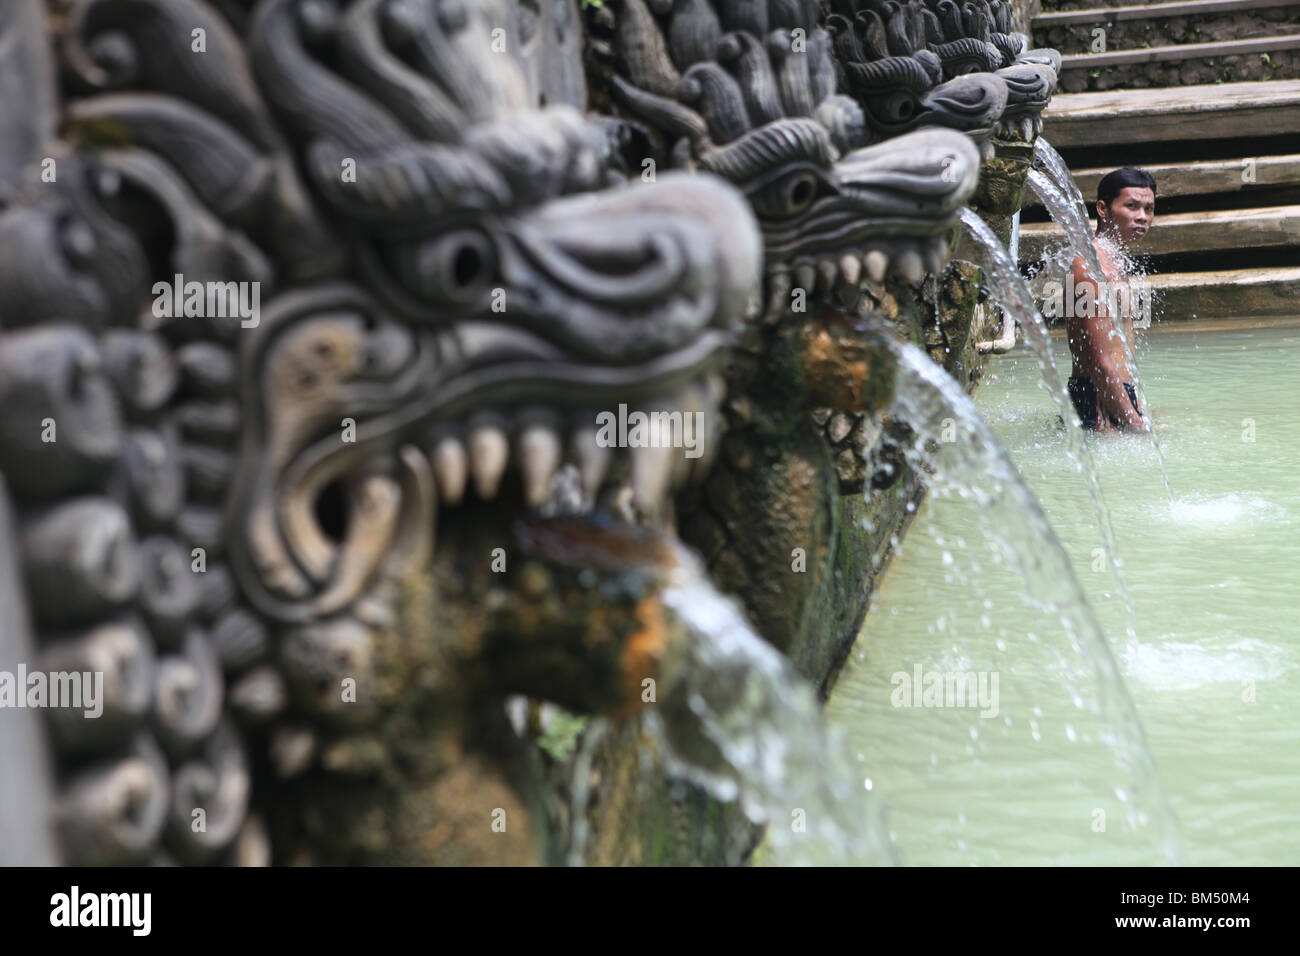 A man at the thermal spring water swimming pool in Bali, Obyek Wisata, Air Panas Banjar, near Lovina in Bali, Indonesia. Stock Photo